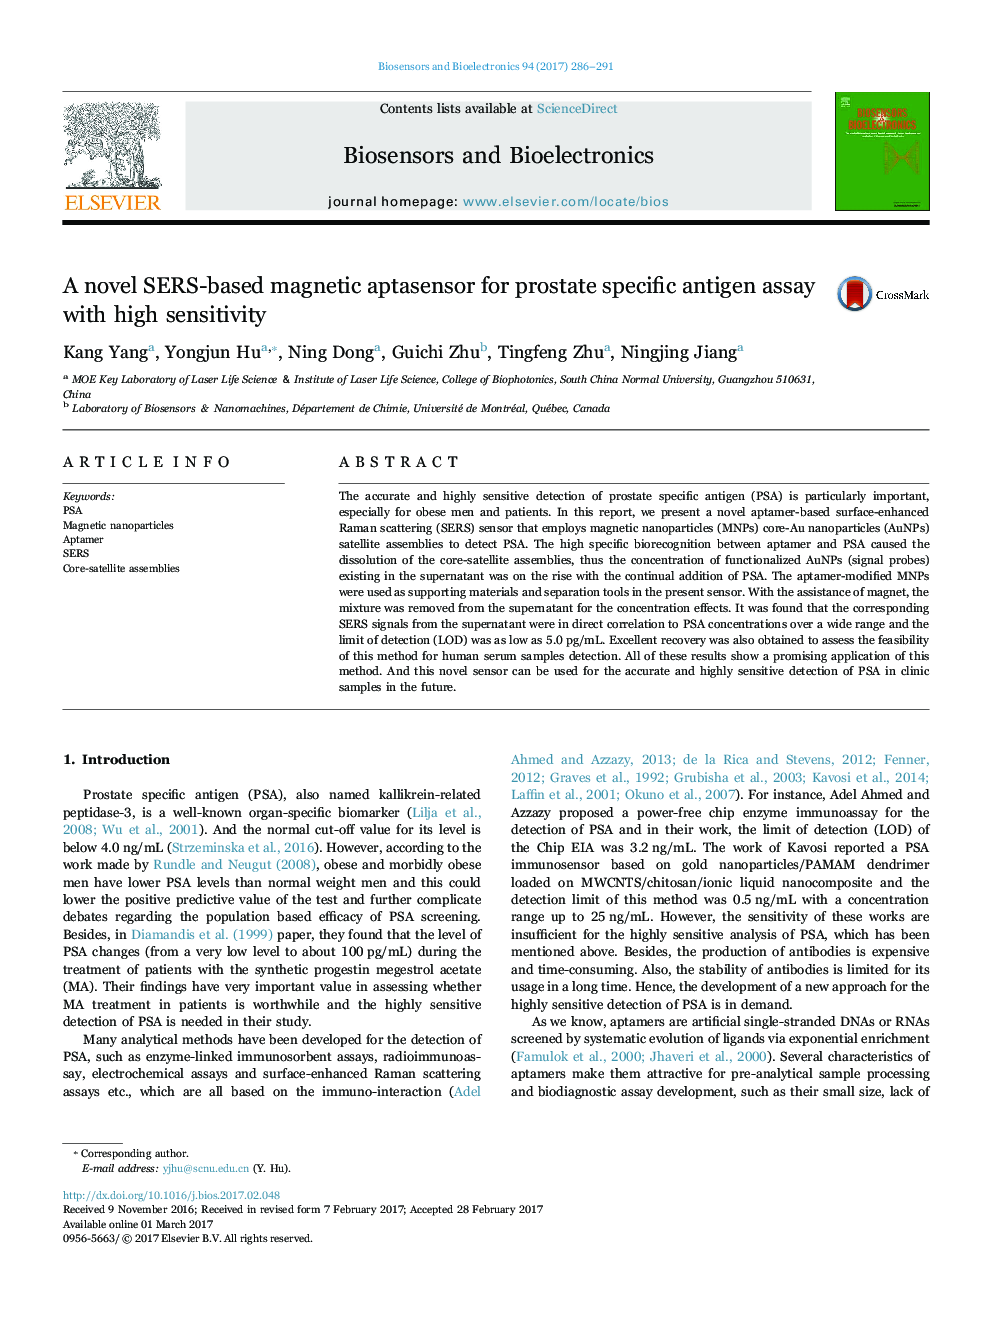 A novel SERS-based magnetic aptasensor for prostate specific antigen assay with high sensitivity